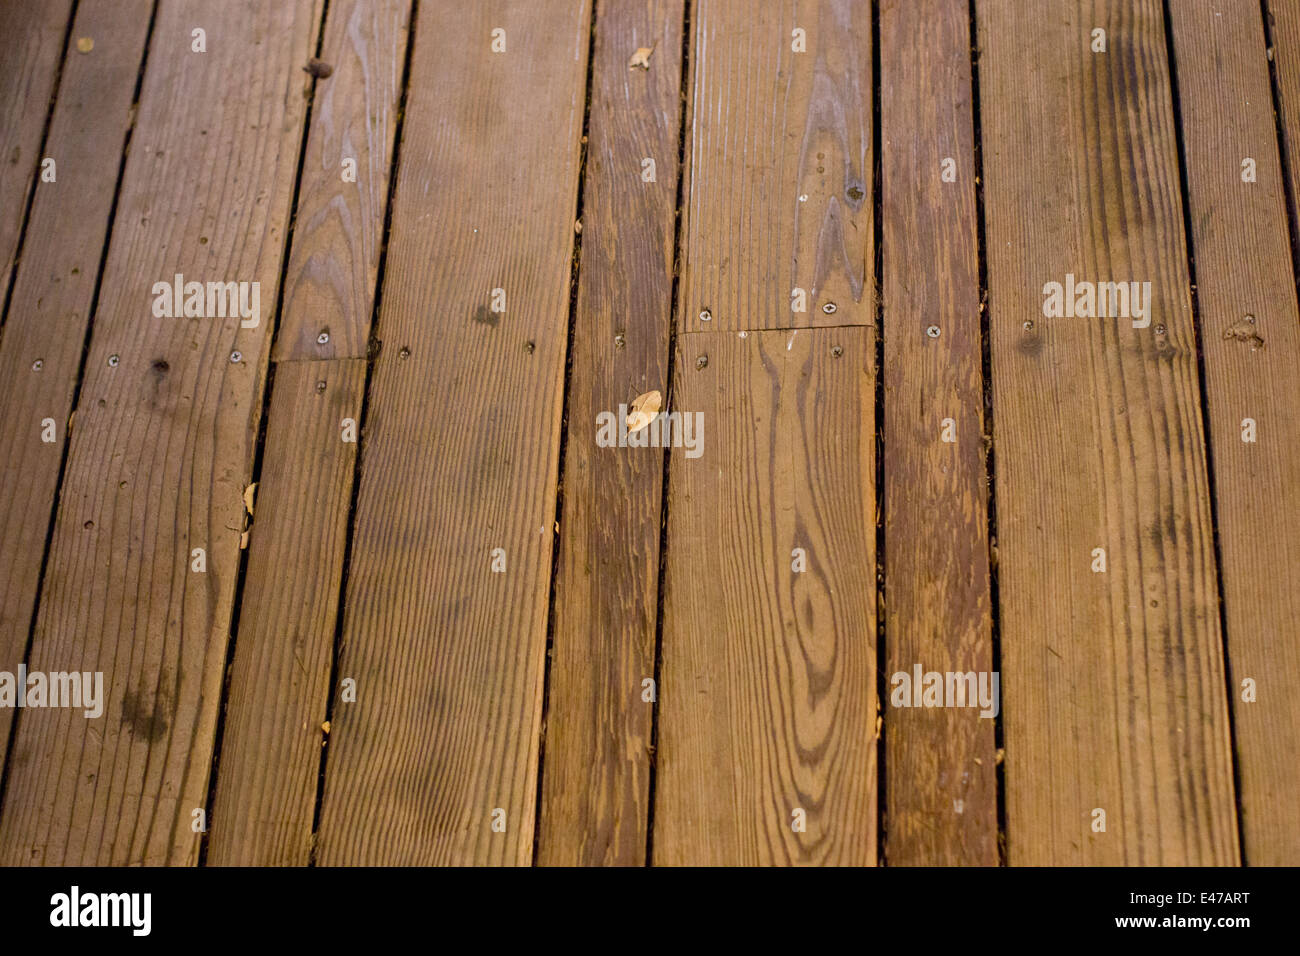 hard wood flooring Stock Photo